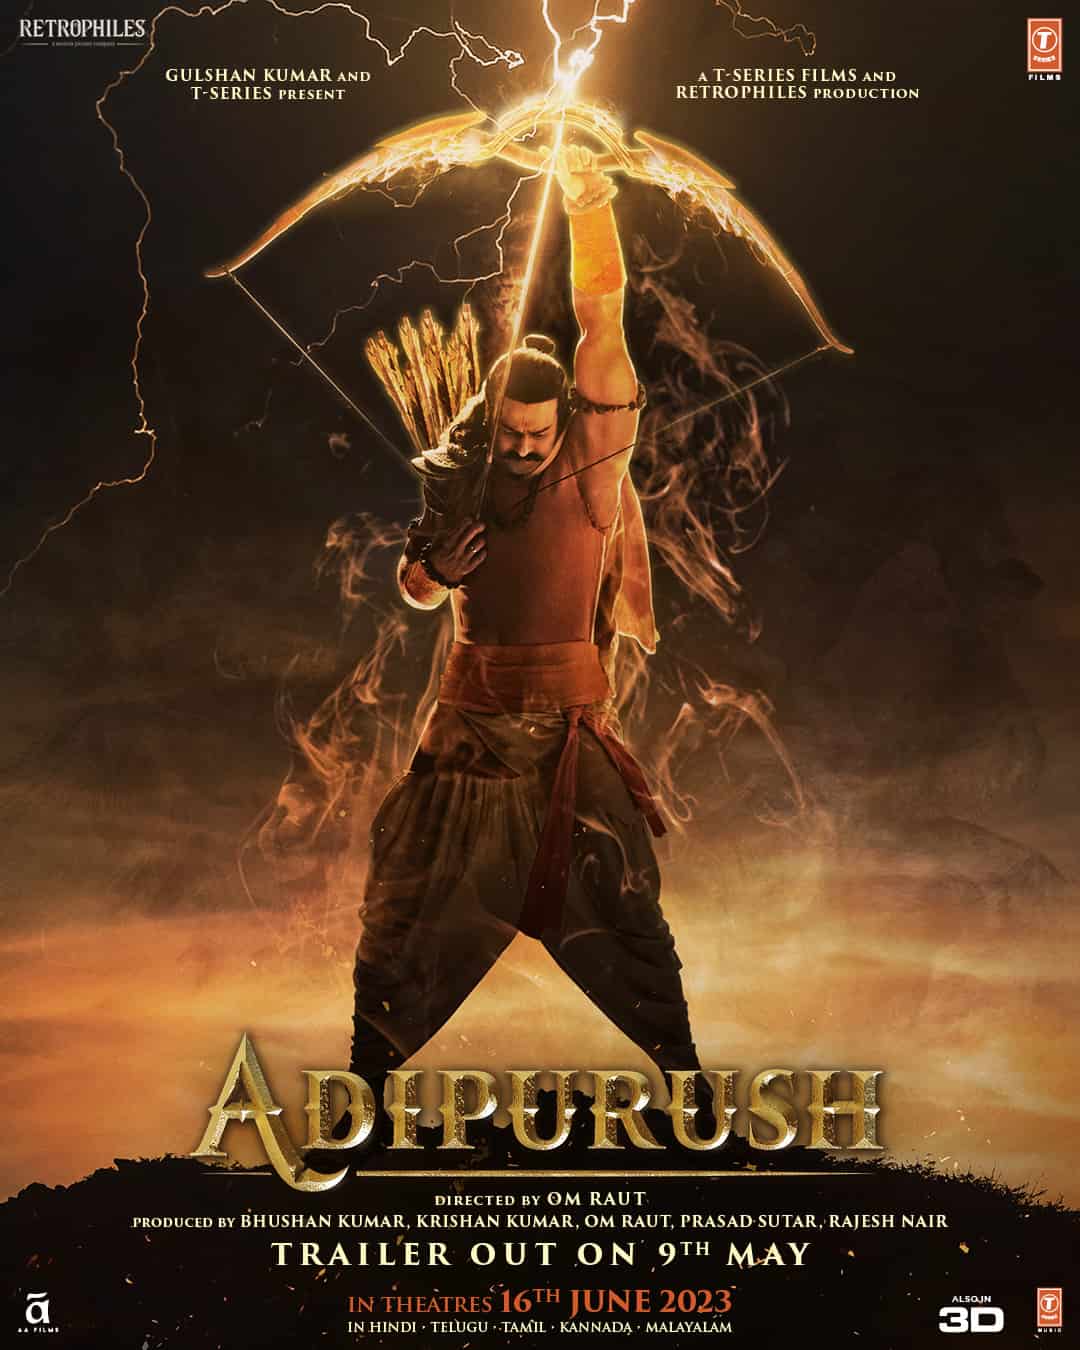 Adipurush Trailer Screened in Hyd, Fans Going Gaga!